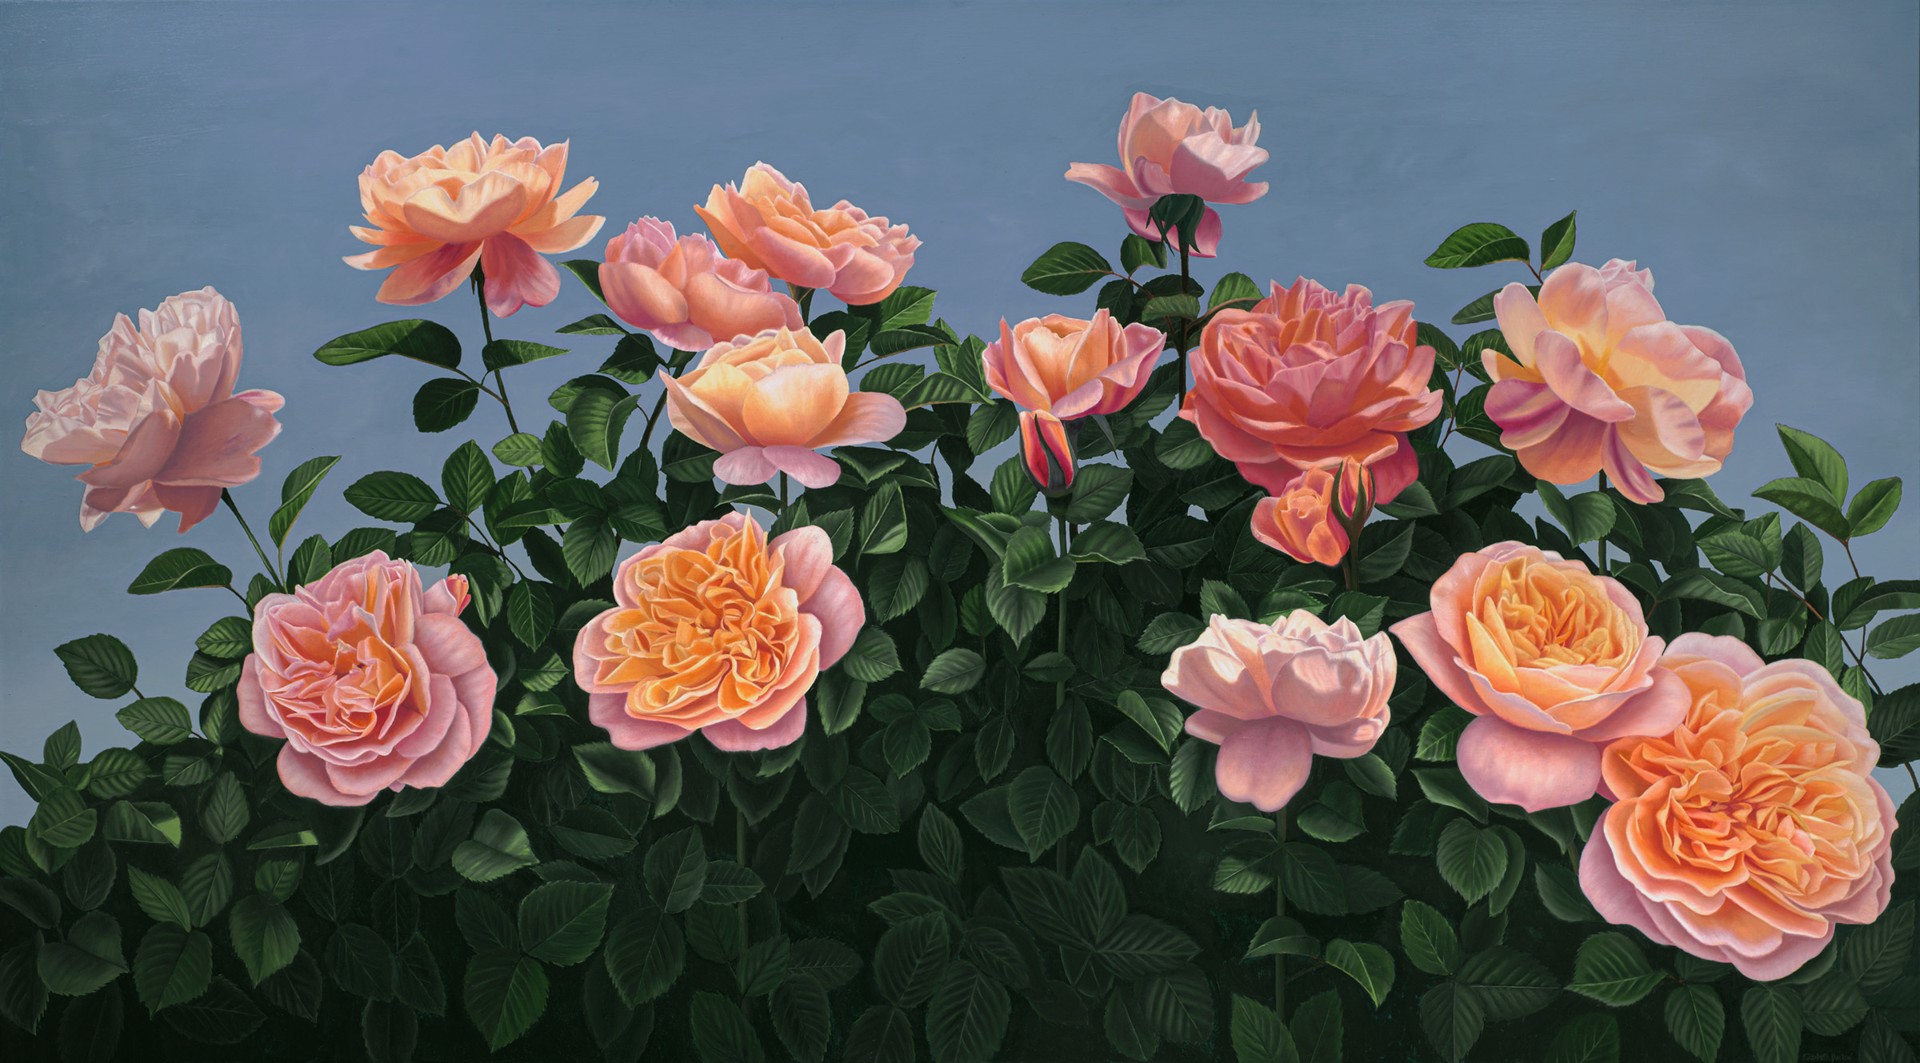 The Phoenix Rose - a commission by Elizabeth Barlow